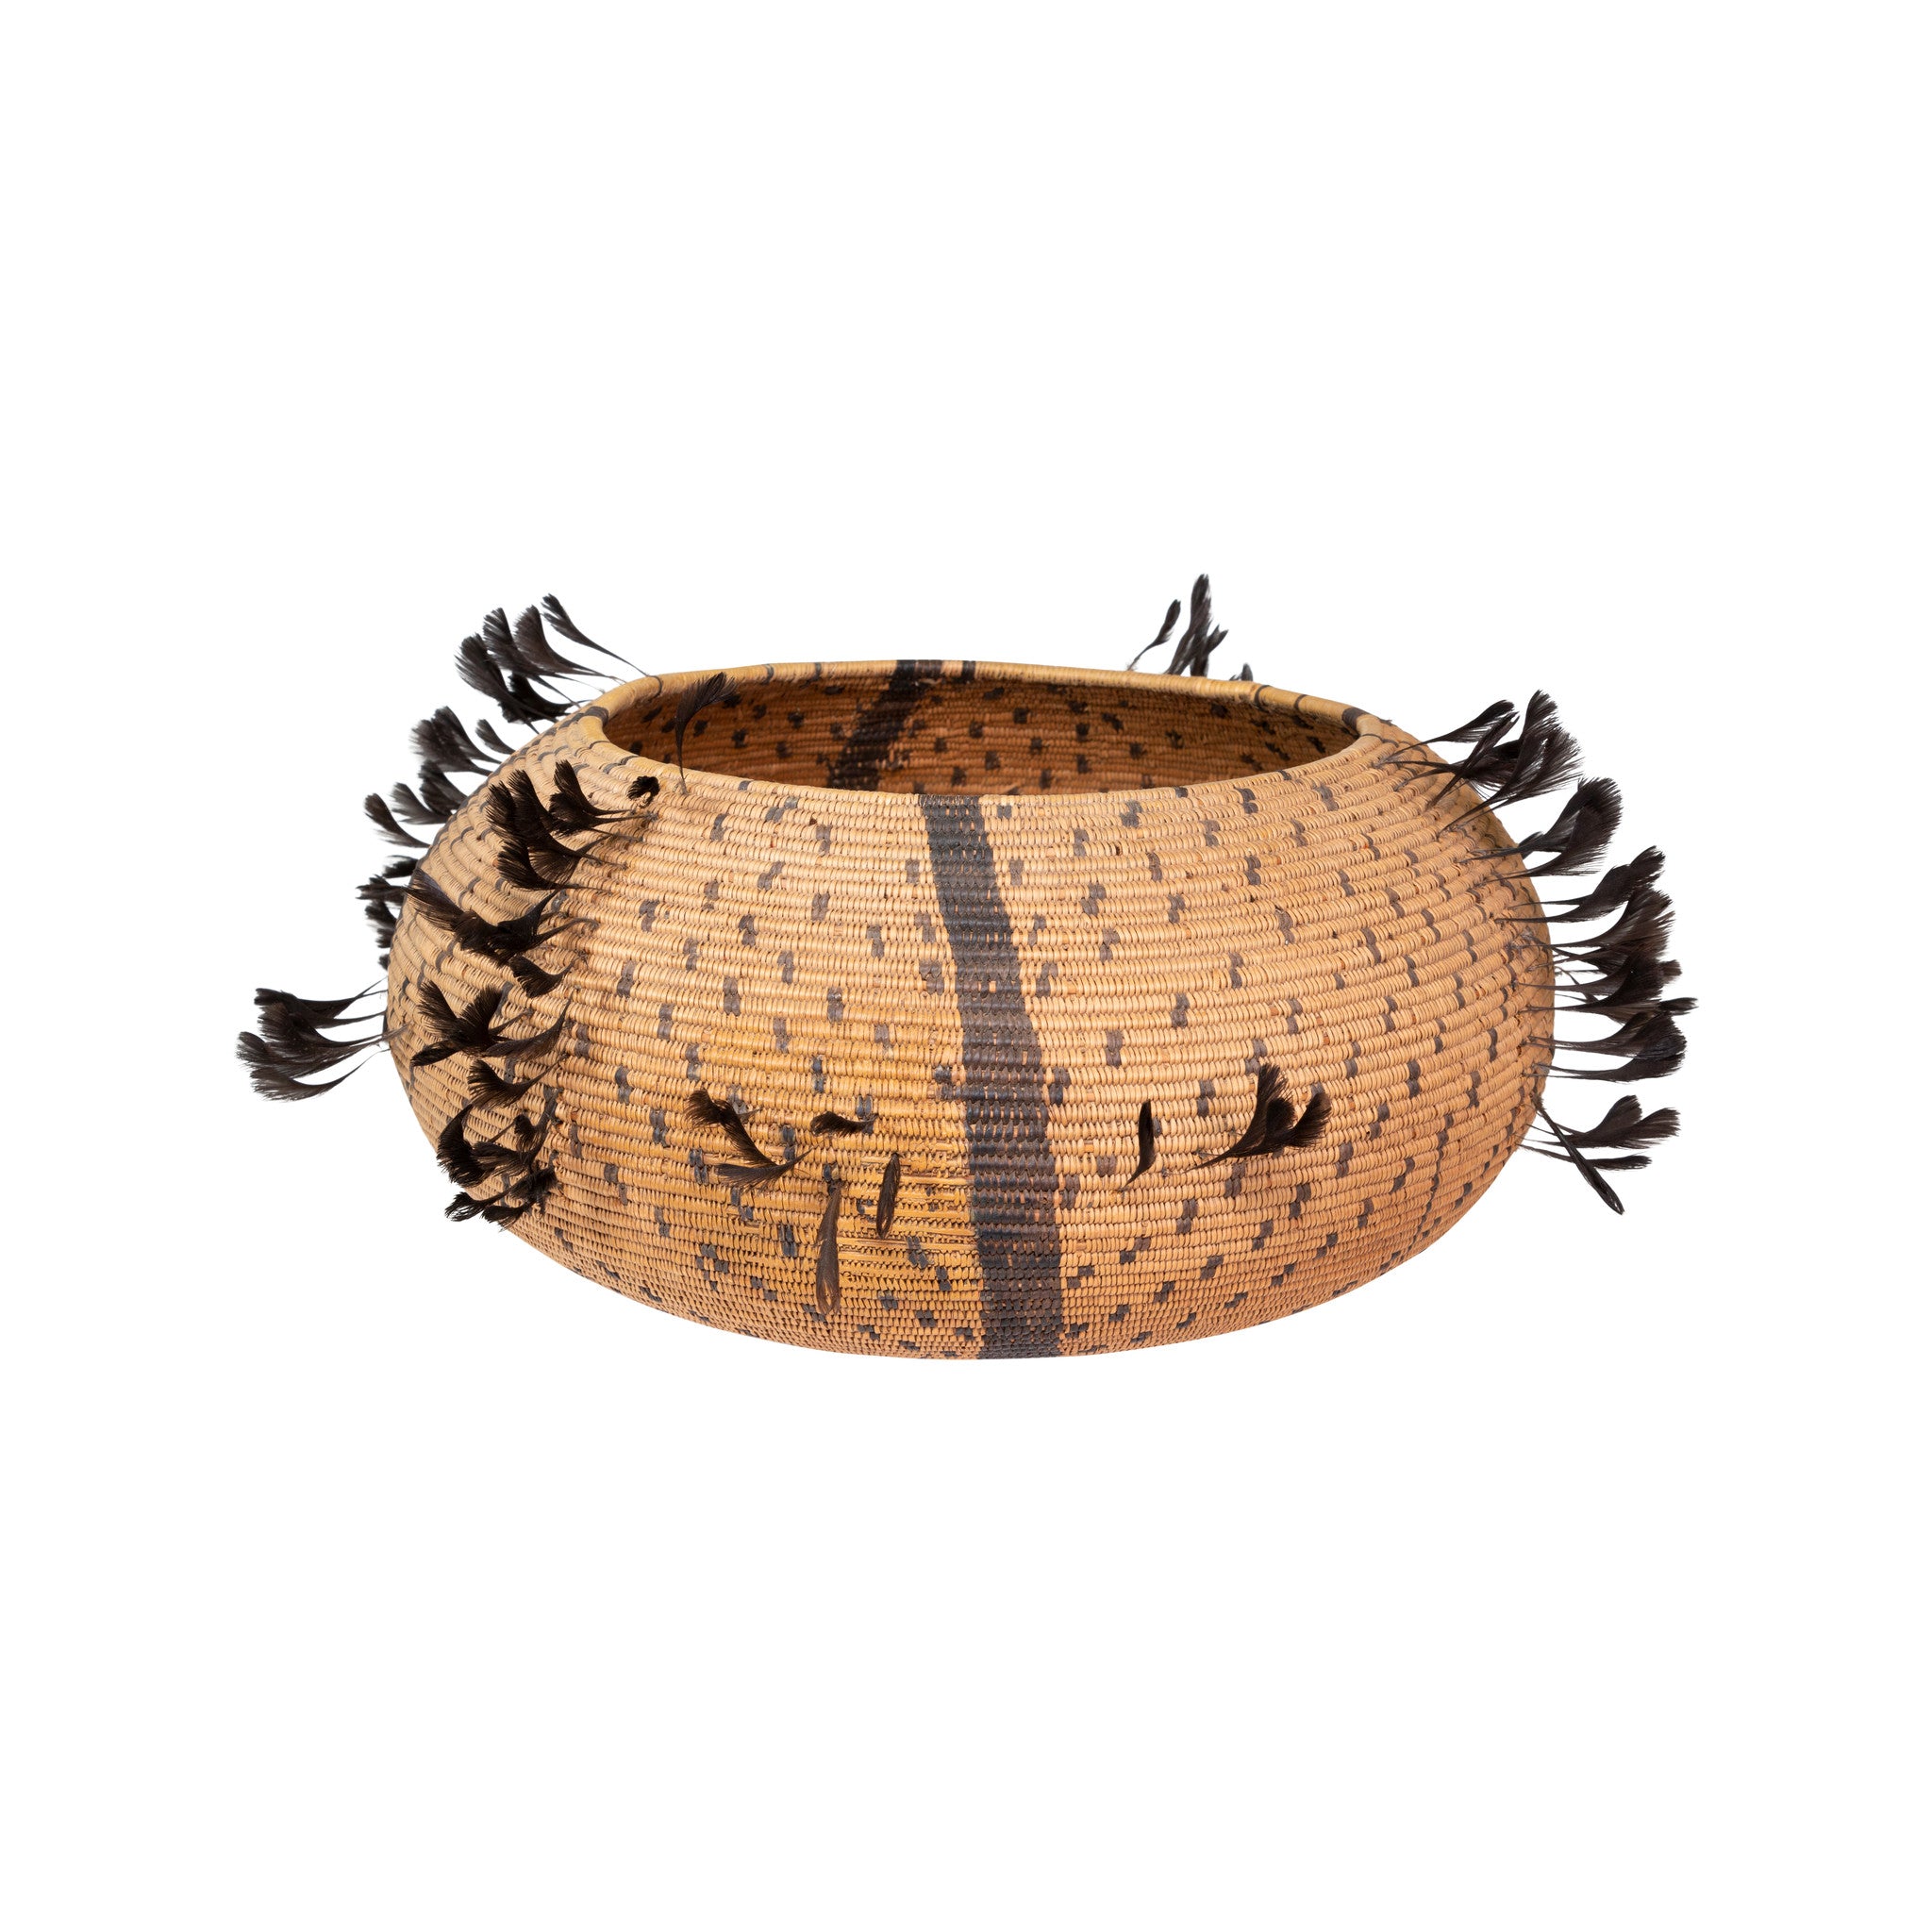 Feathered Pomo Basket, Native, Basketry, Vertical